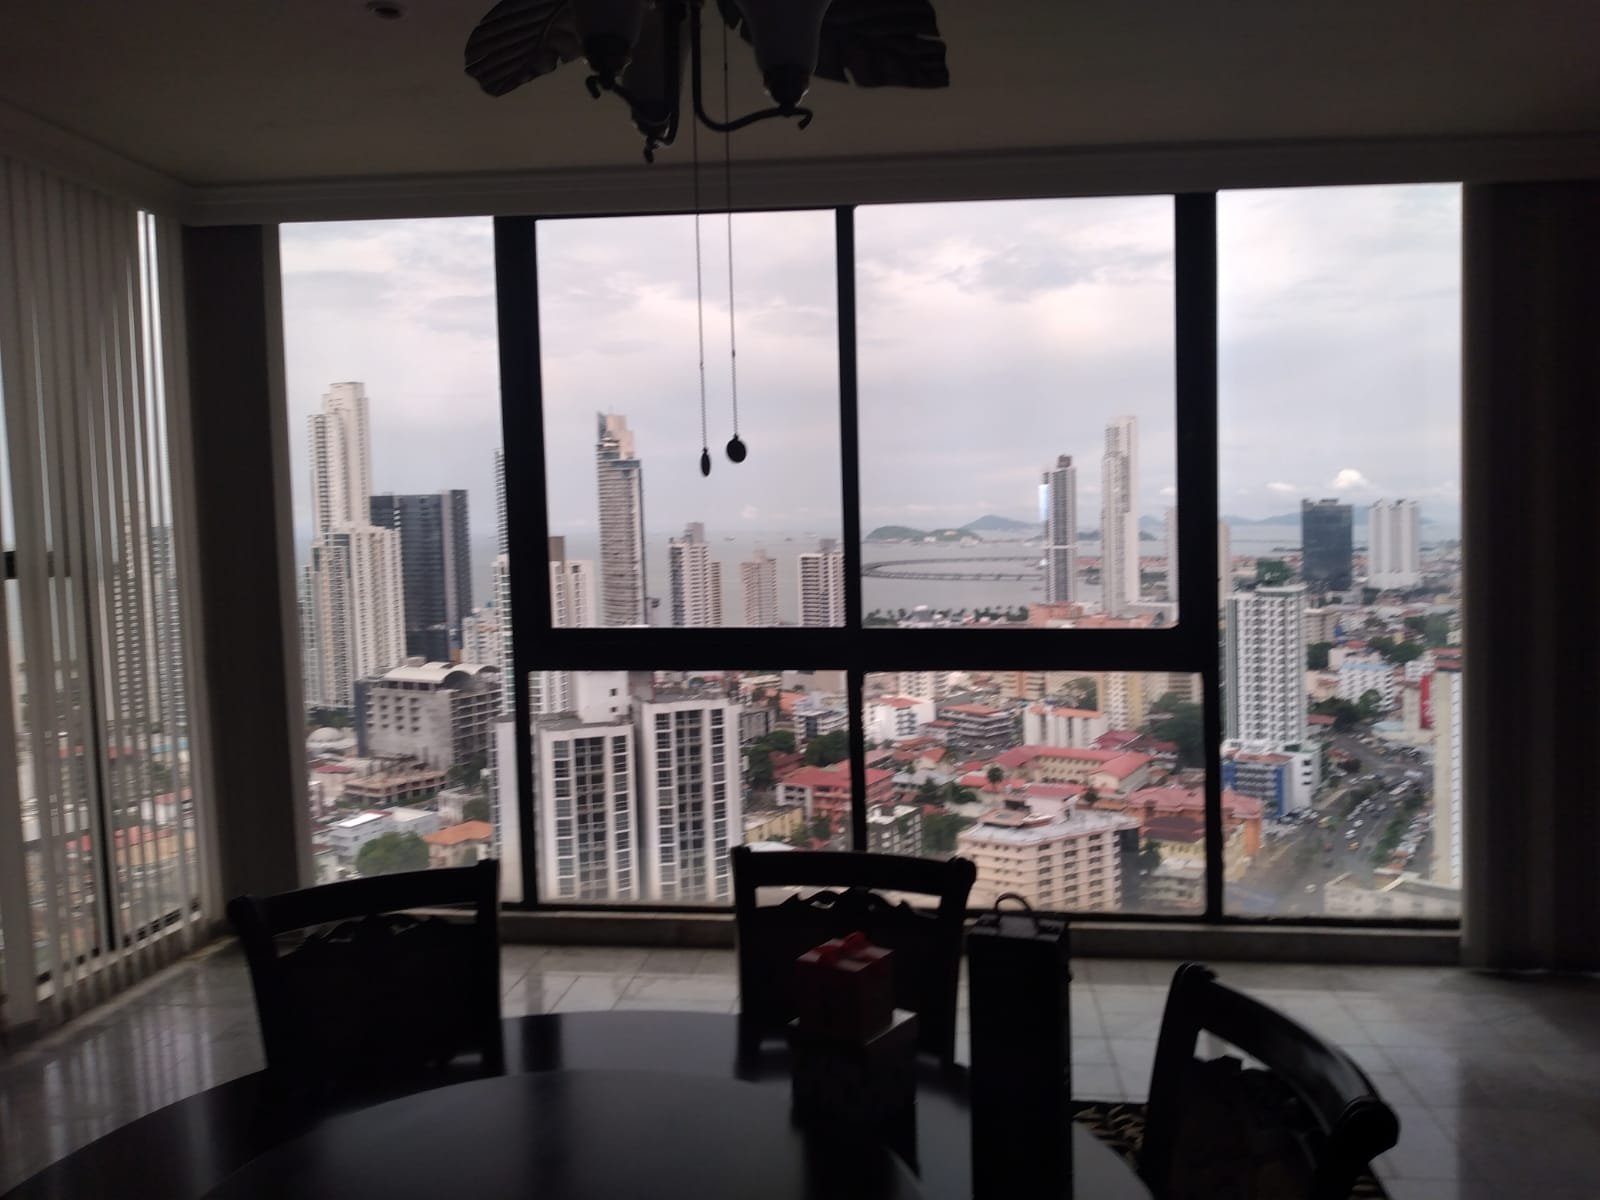 Exclusive 386 sqm Apartment Overlooking Panama Canal - PLS-19930 | Prime La Cresta Real Estate